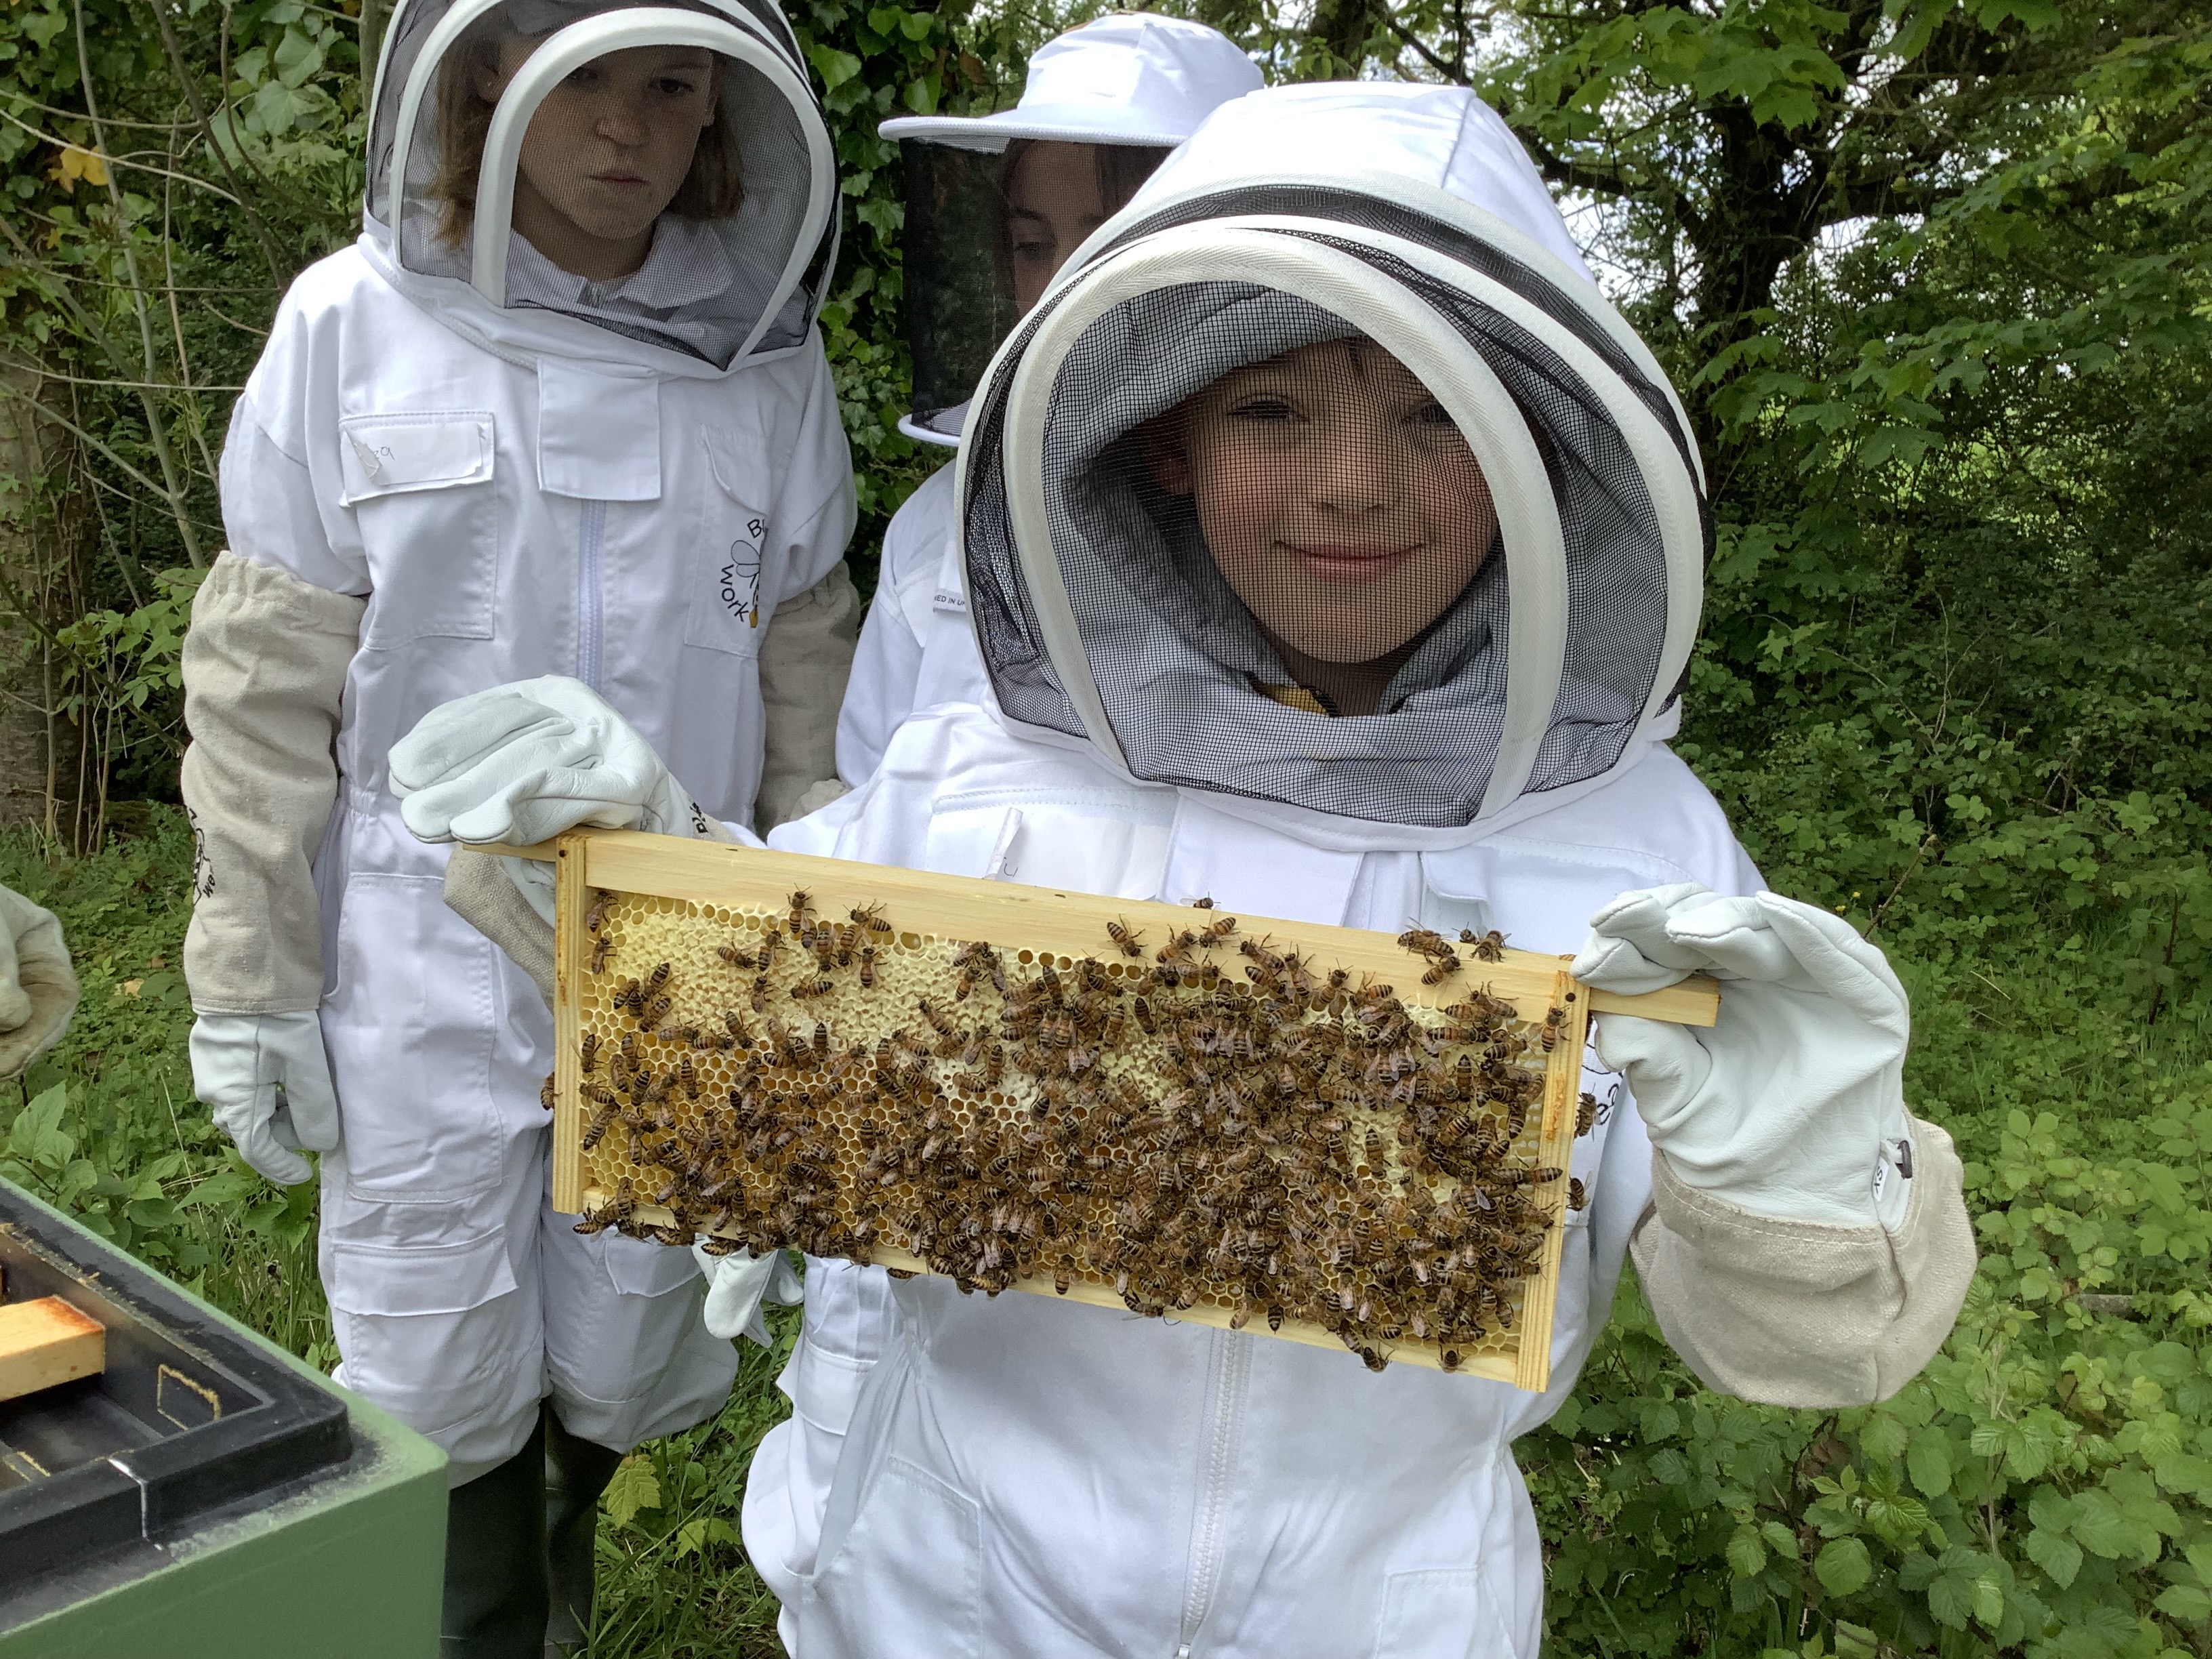 The young beekeepers at Symondsbury Primary School